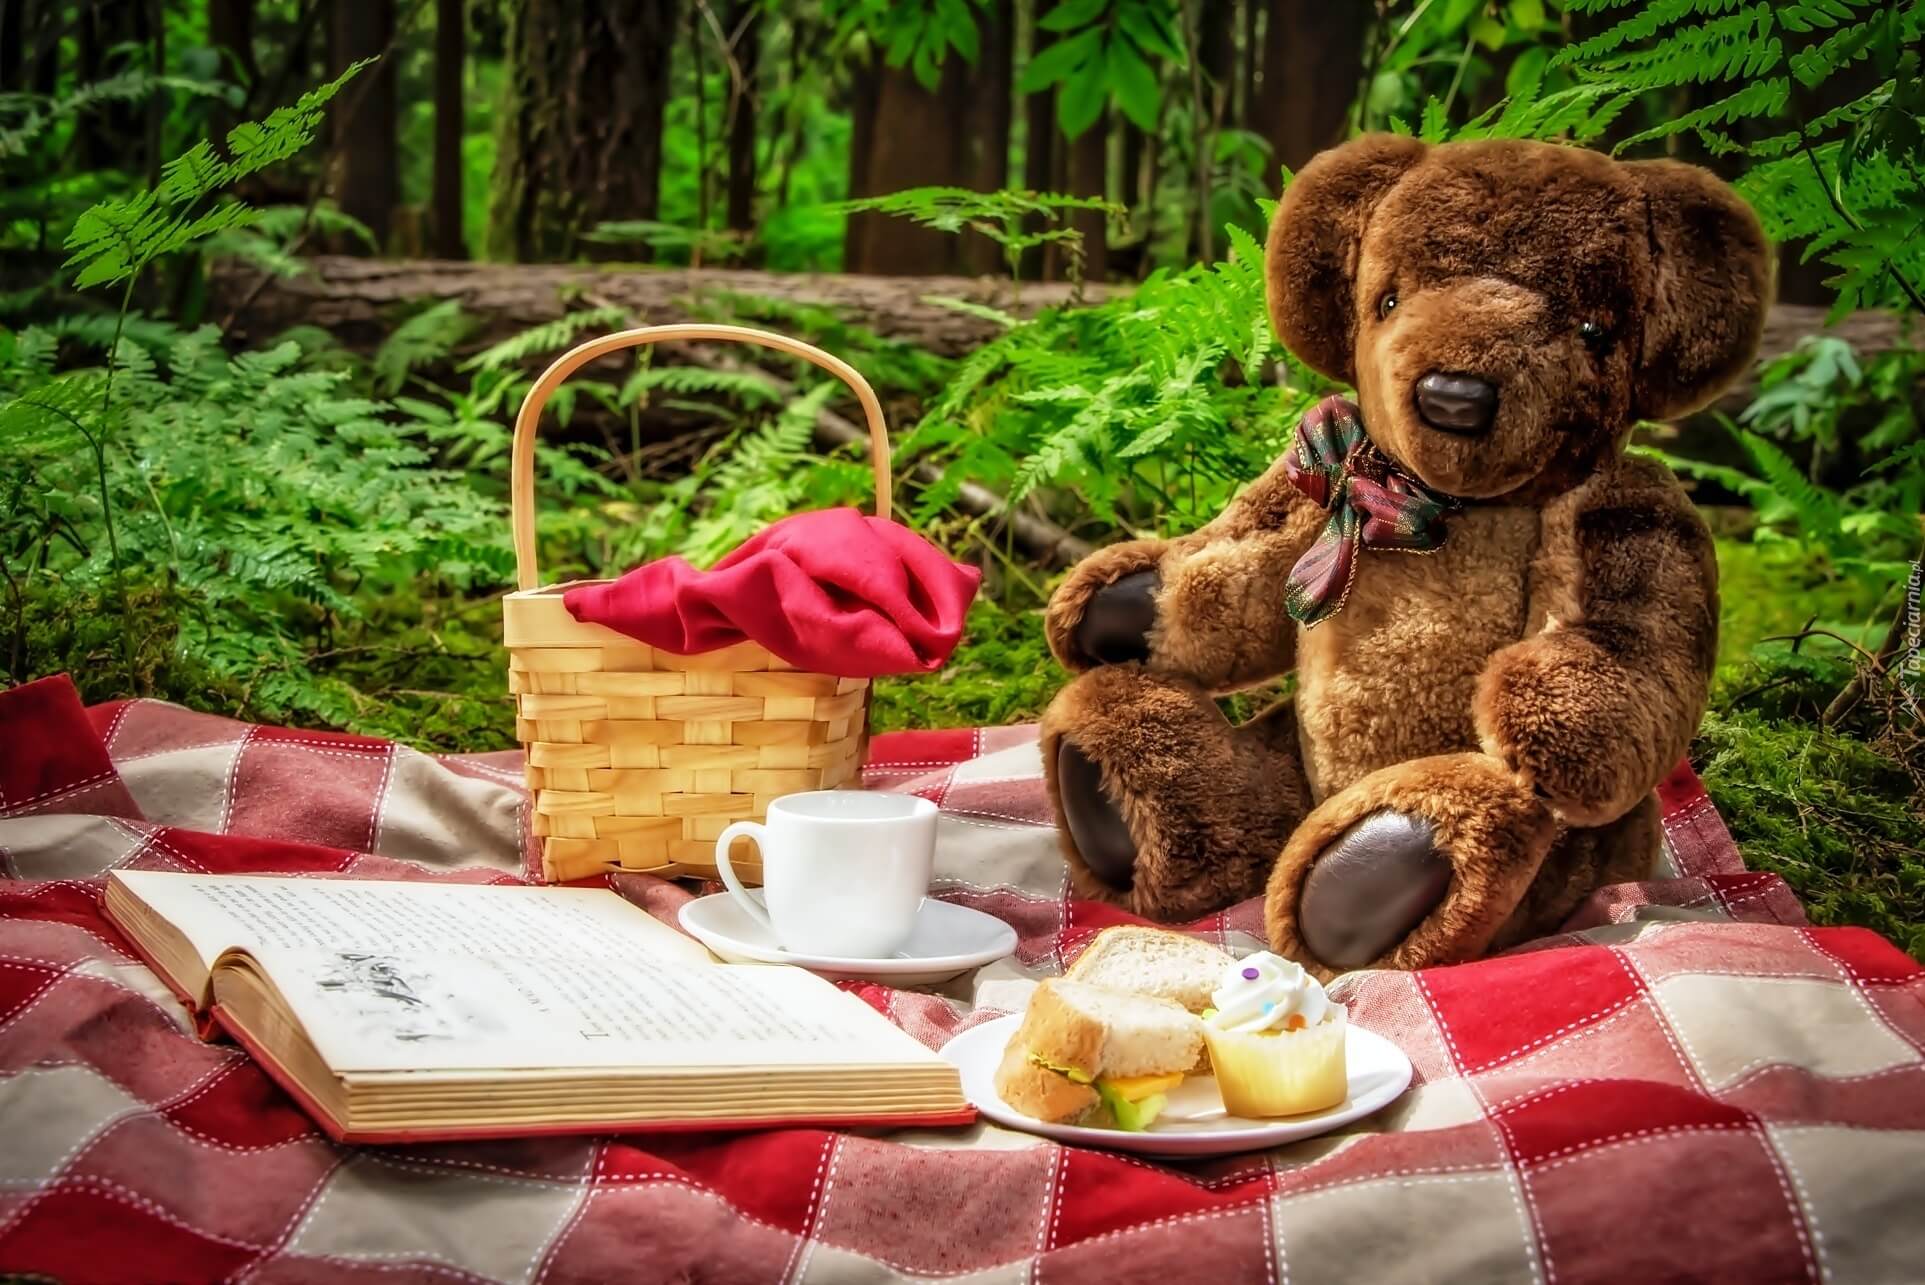 Teddy Bear Picnic Day